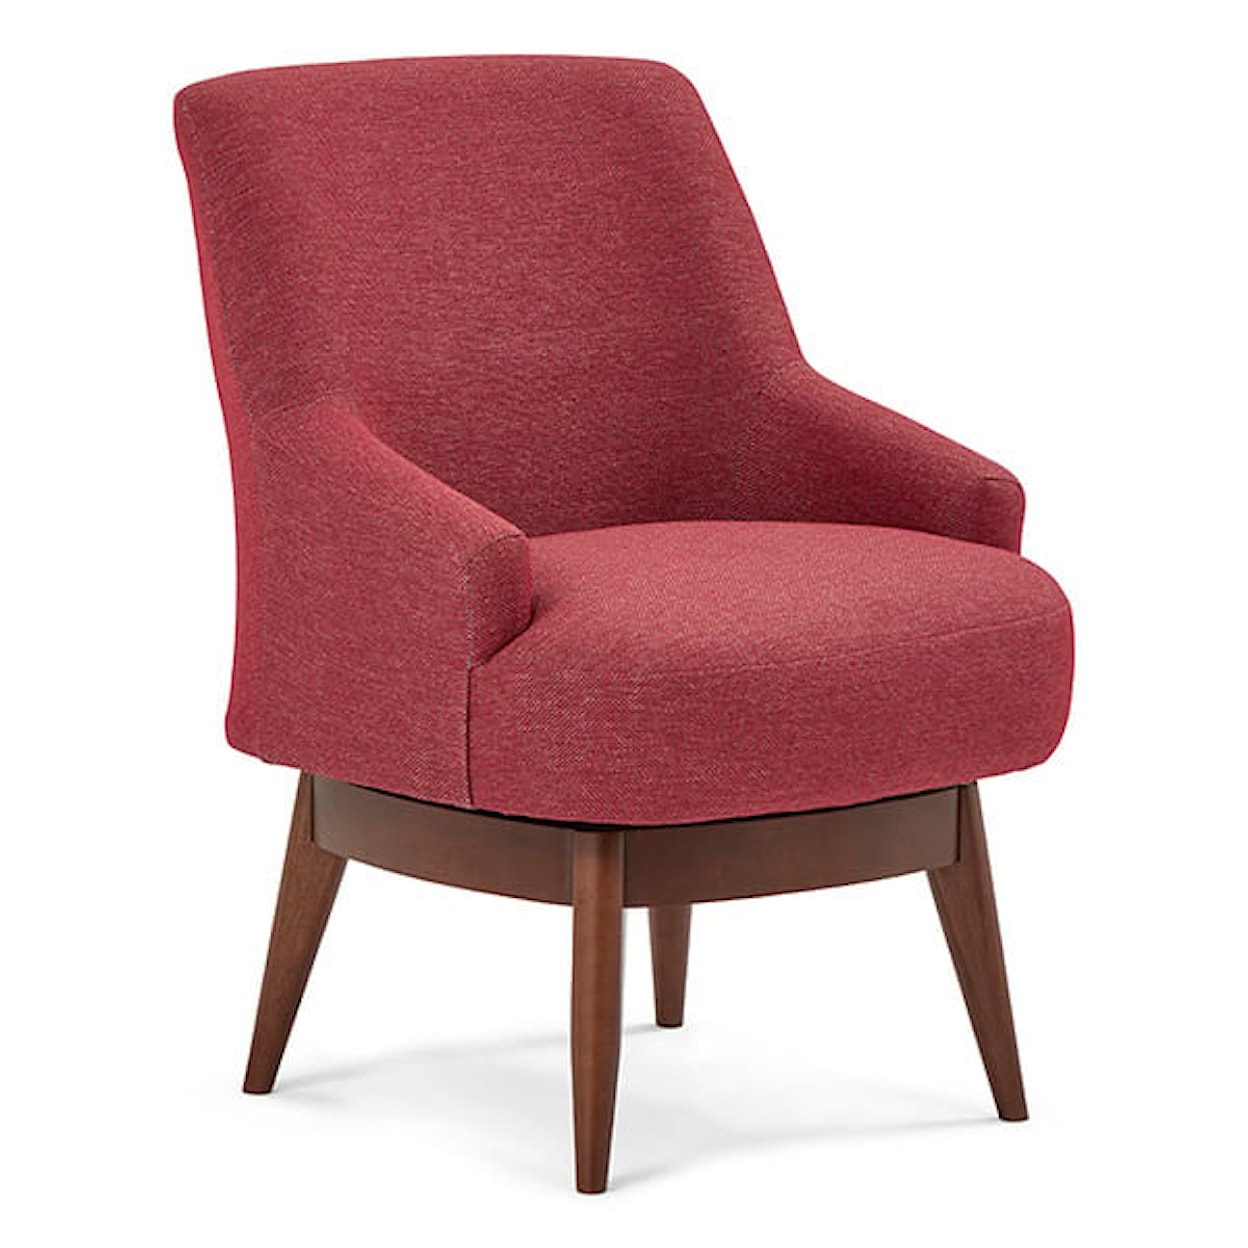 Bravo Furniture Mattay Swivel Chair